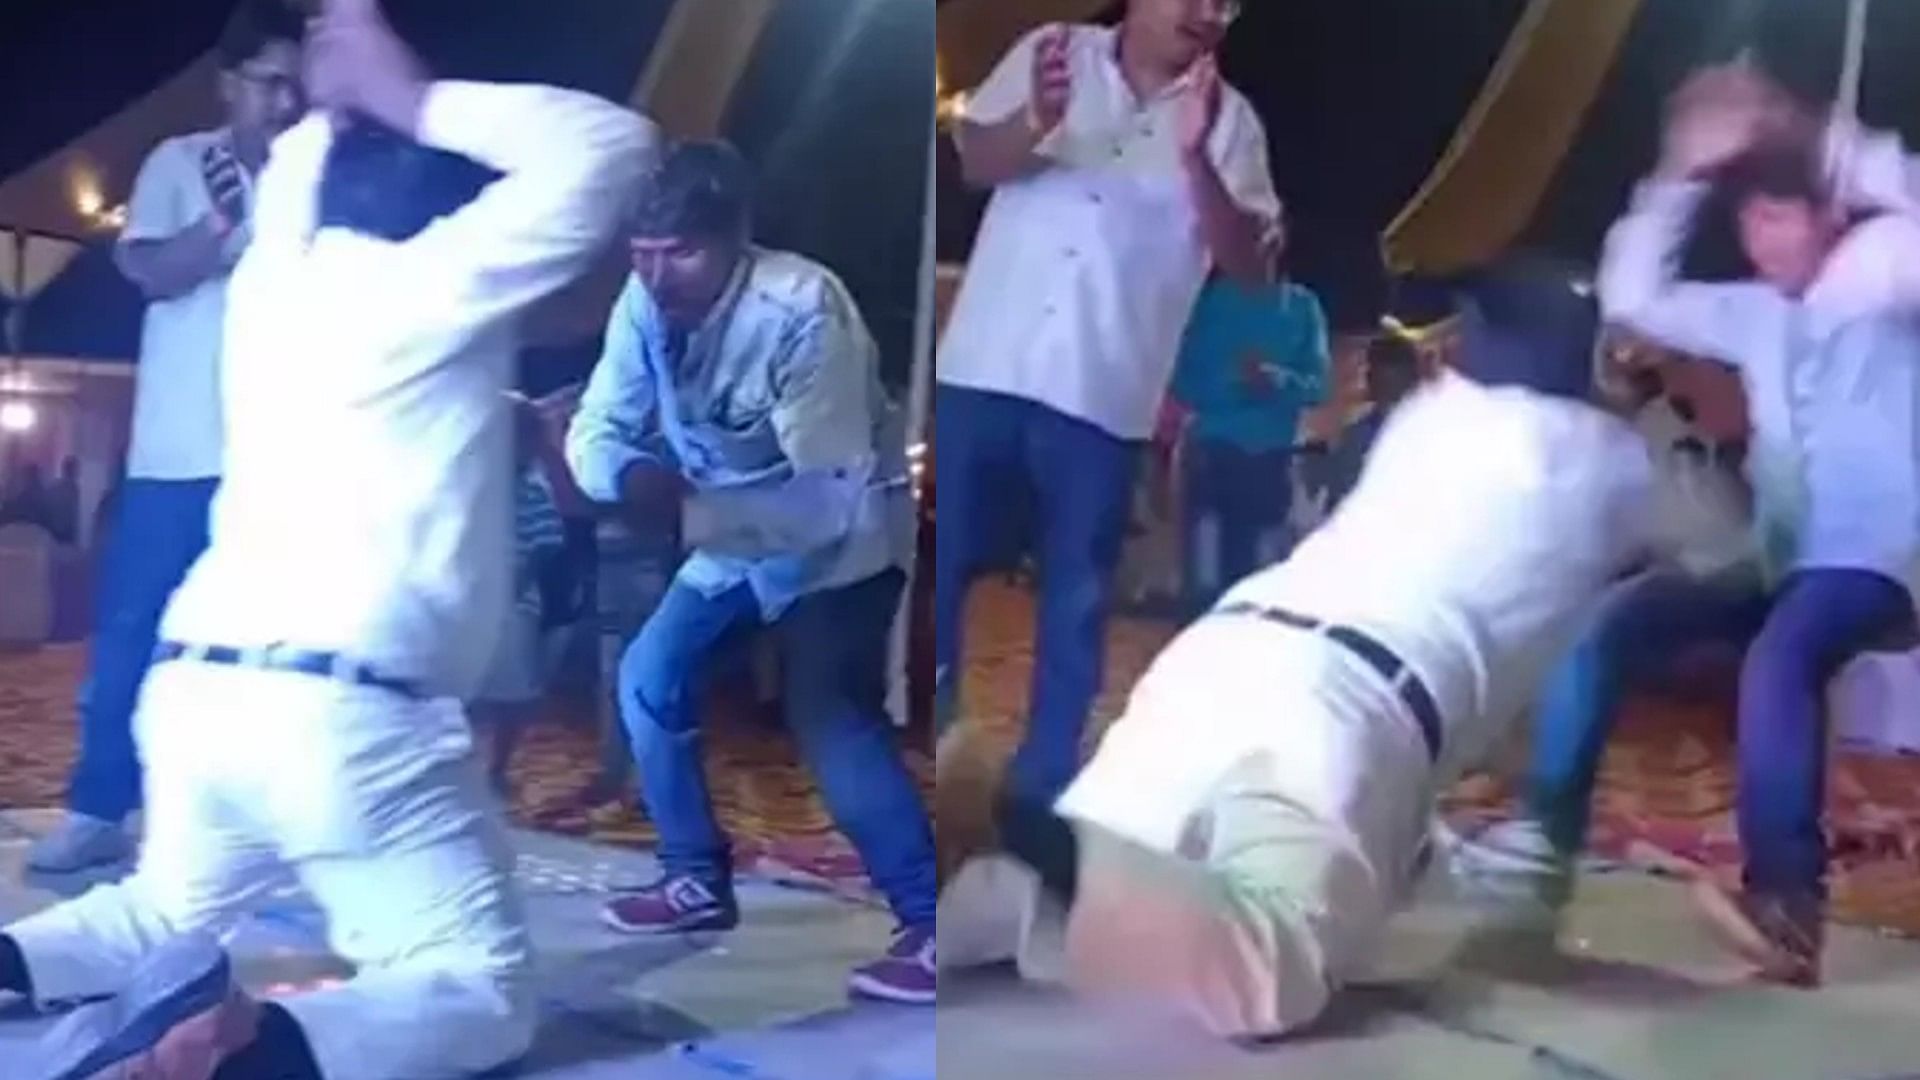 Nagin Dance Video: man did nagin dance terribly in a wedding video viral